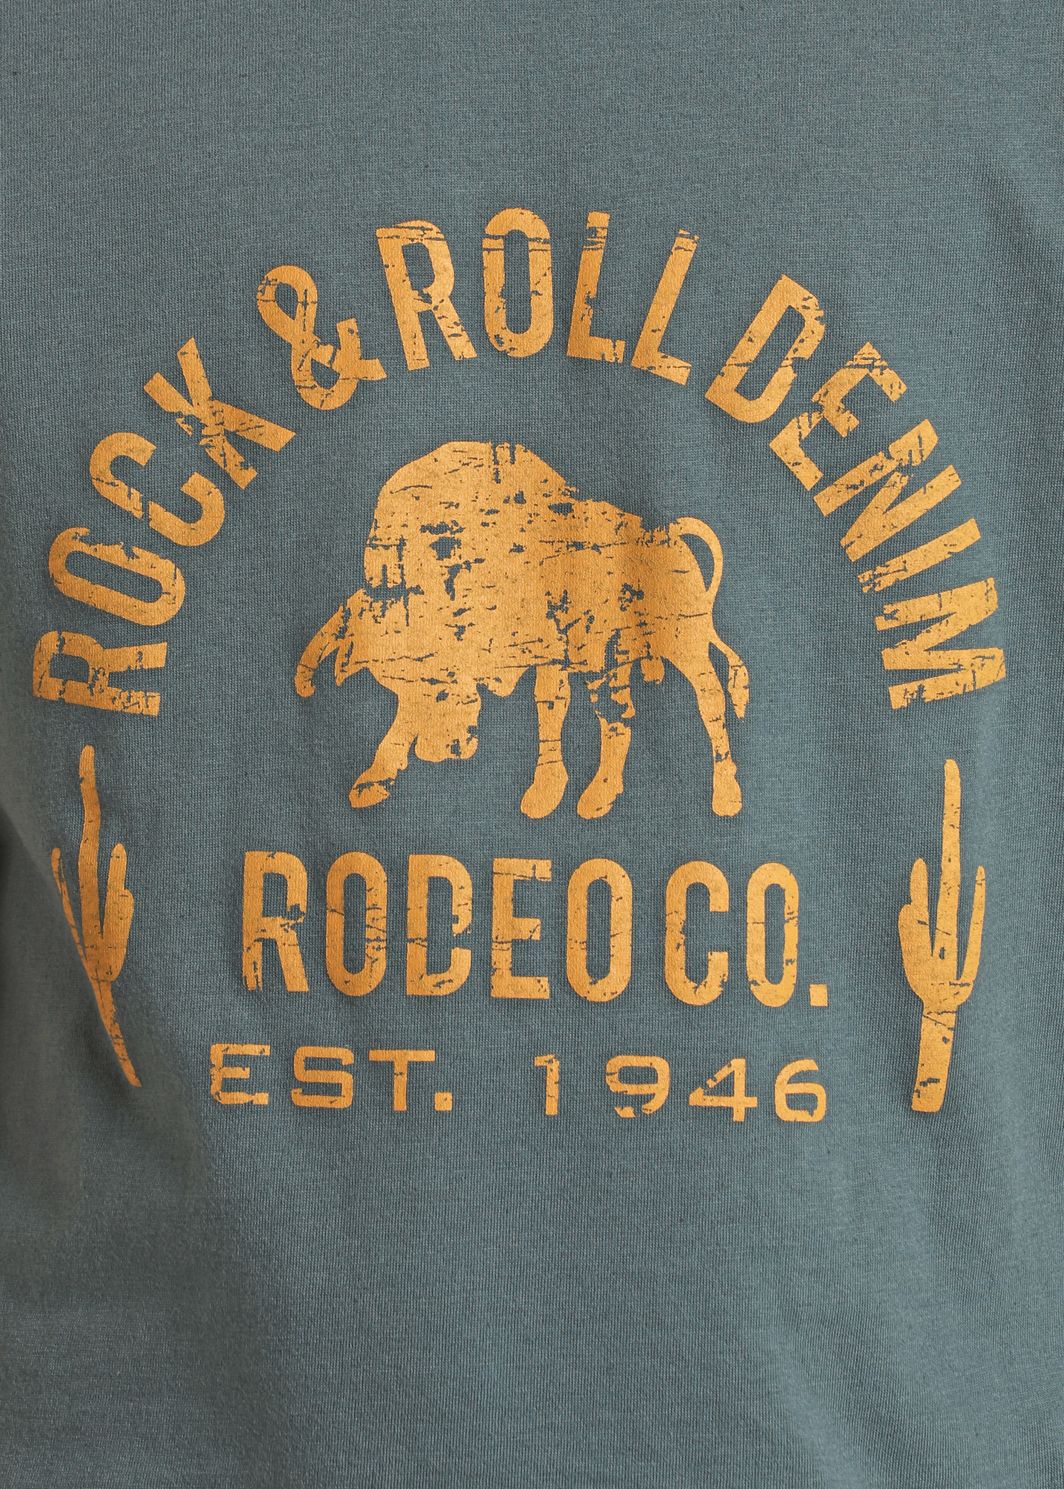 Rock & Roll Boys Logo Bronco tee shirt